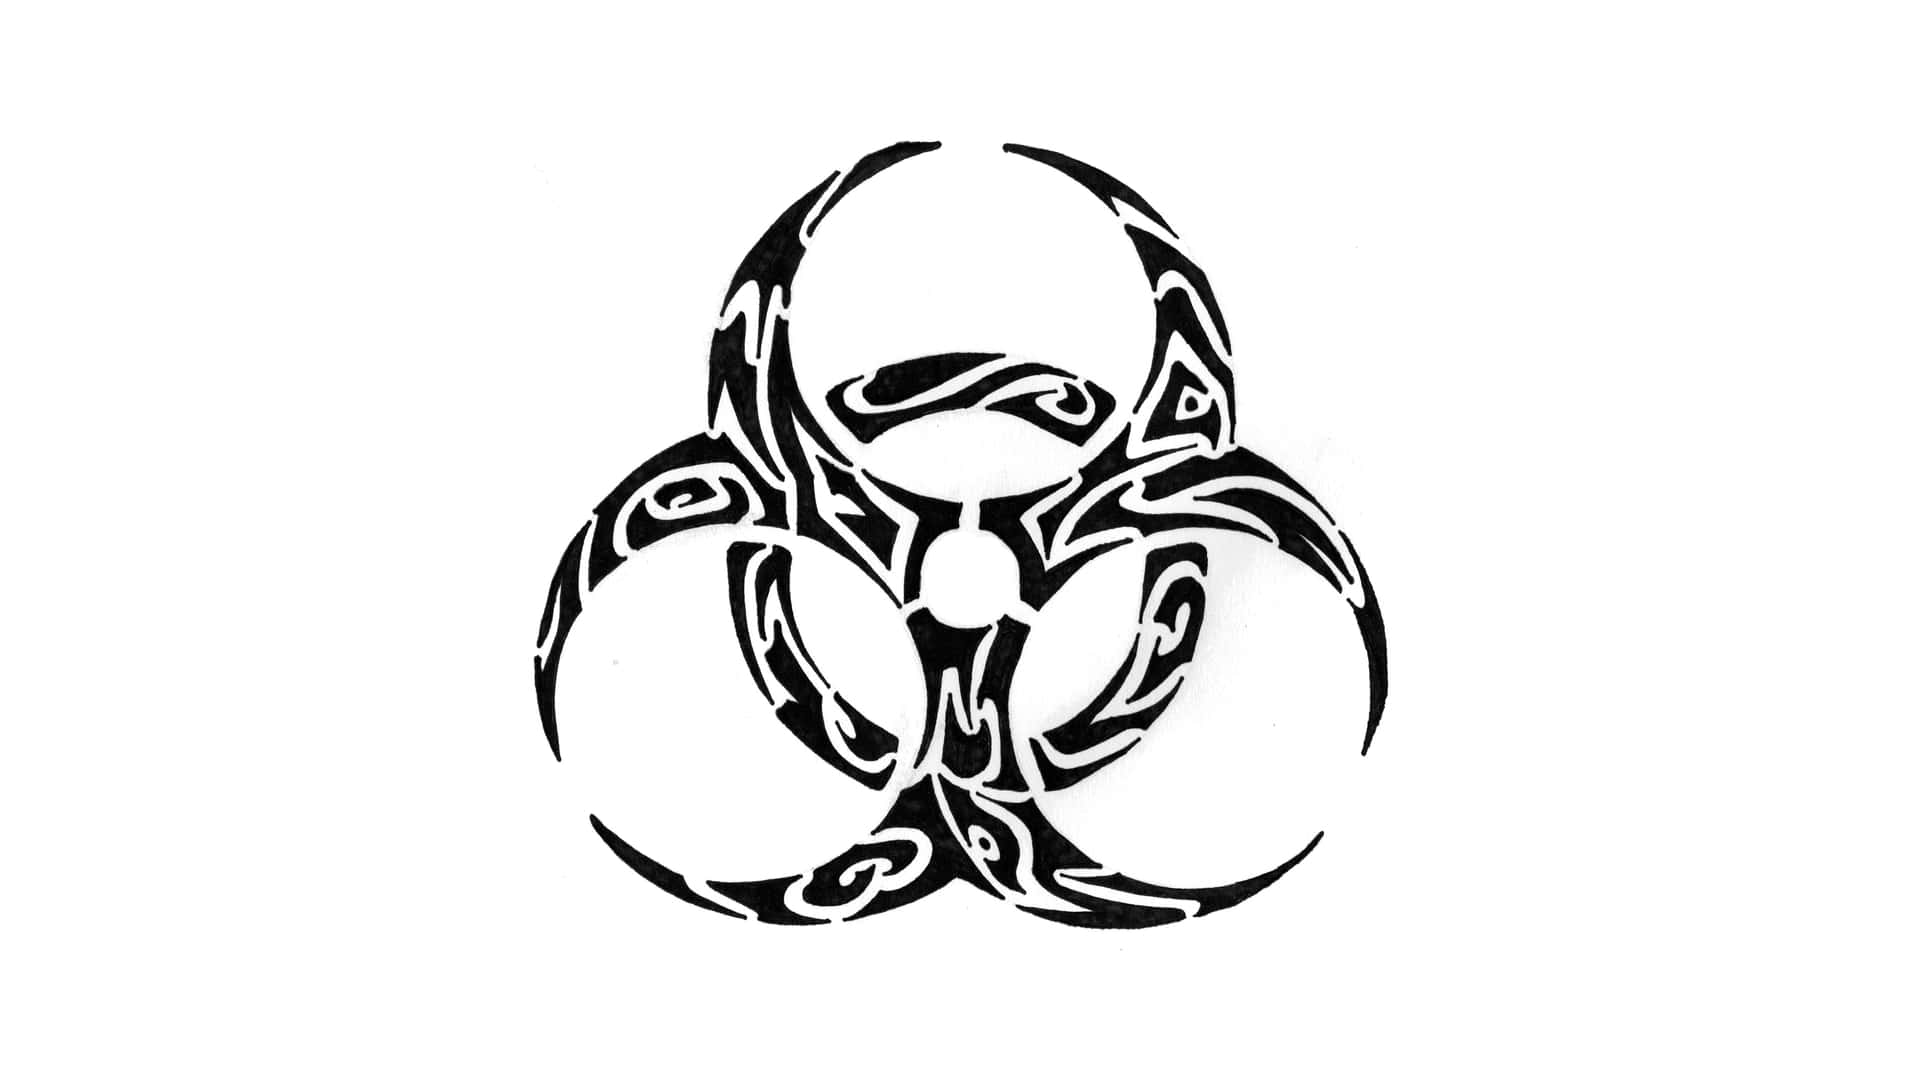 biohazard symbols tattoos